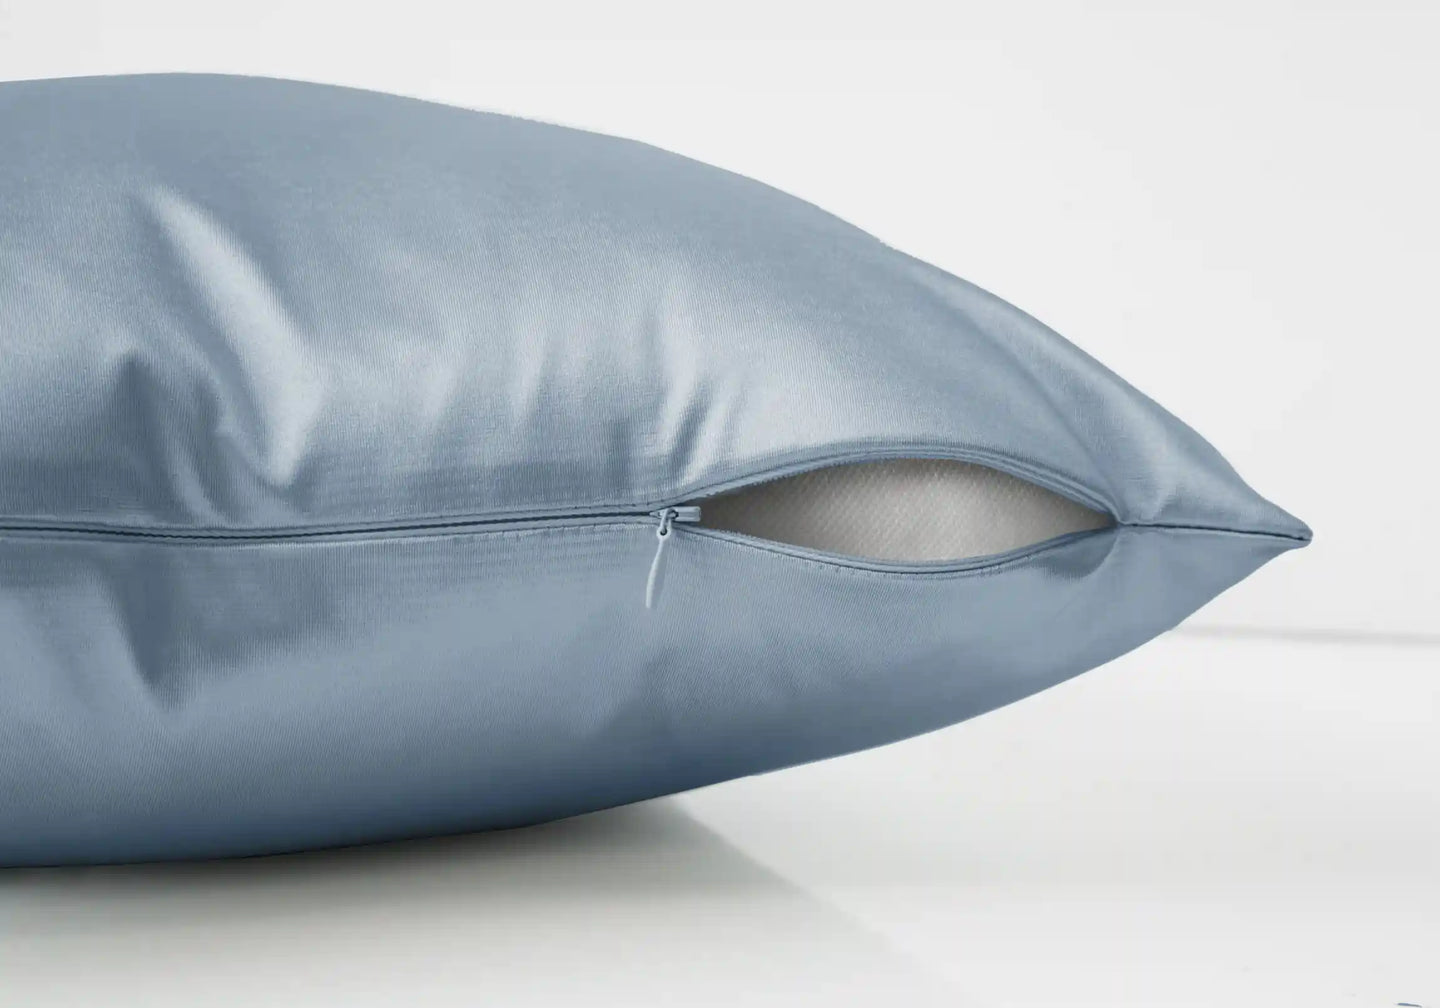 Blue Pillow - I 9342